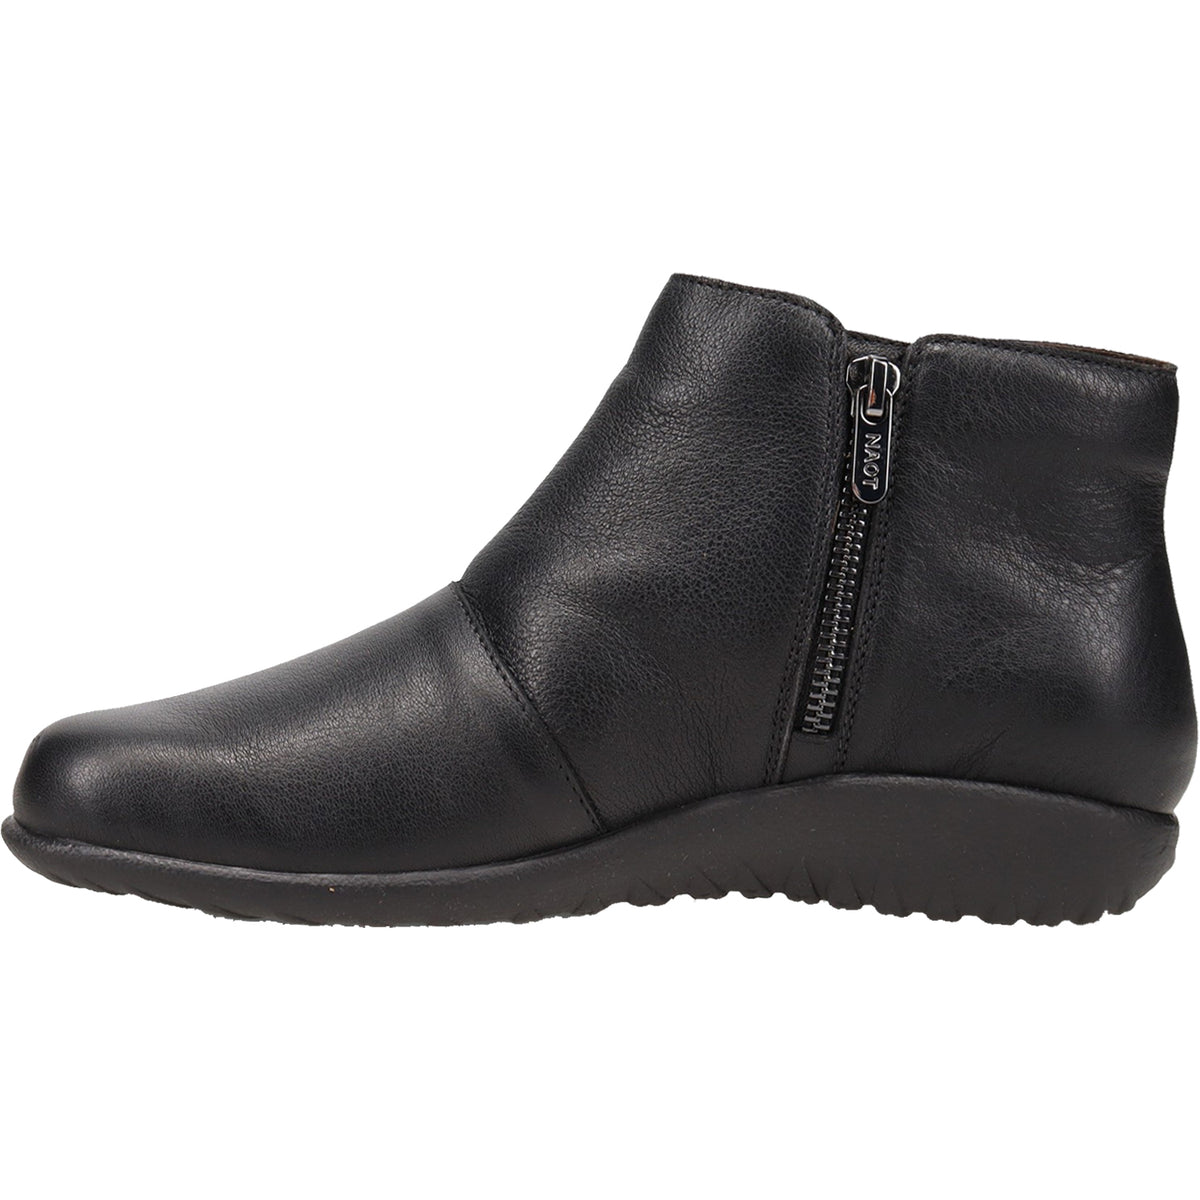 Naot Wanaka Soft Black | Women's Ankle Boots | Footwear etc.